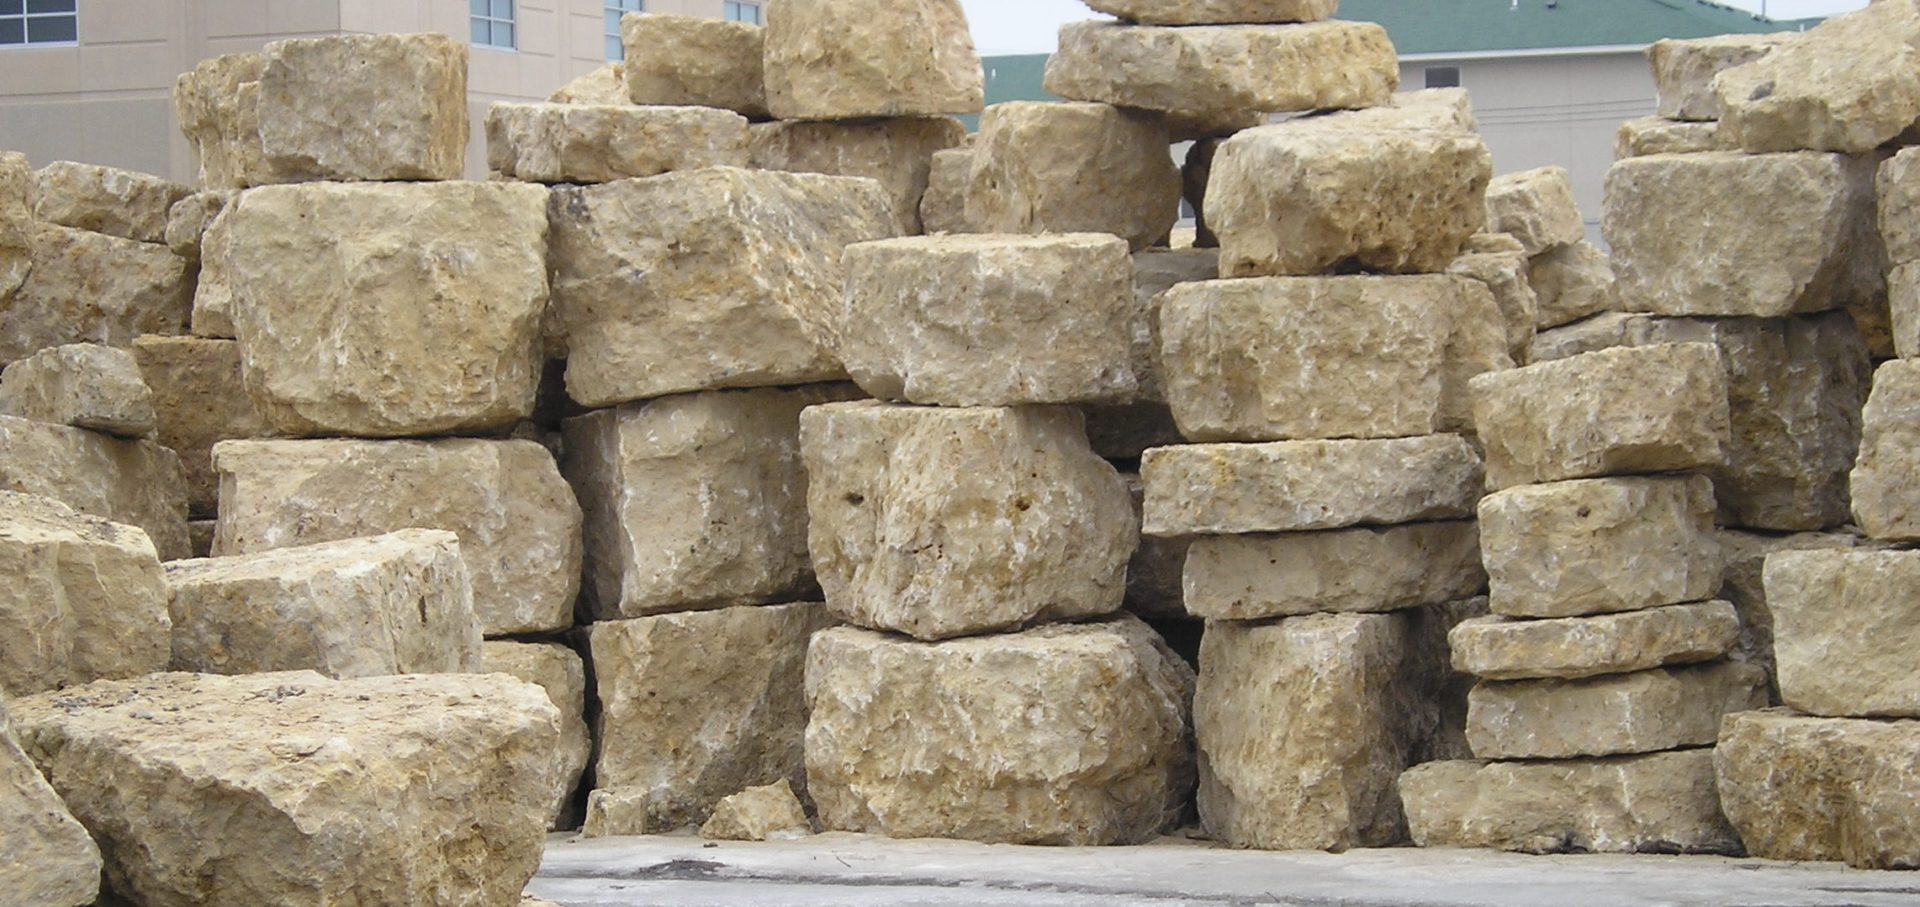 stacked limestone